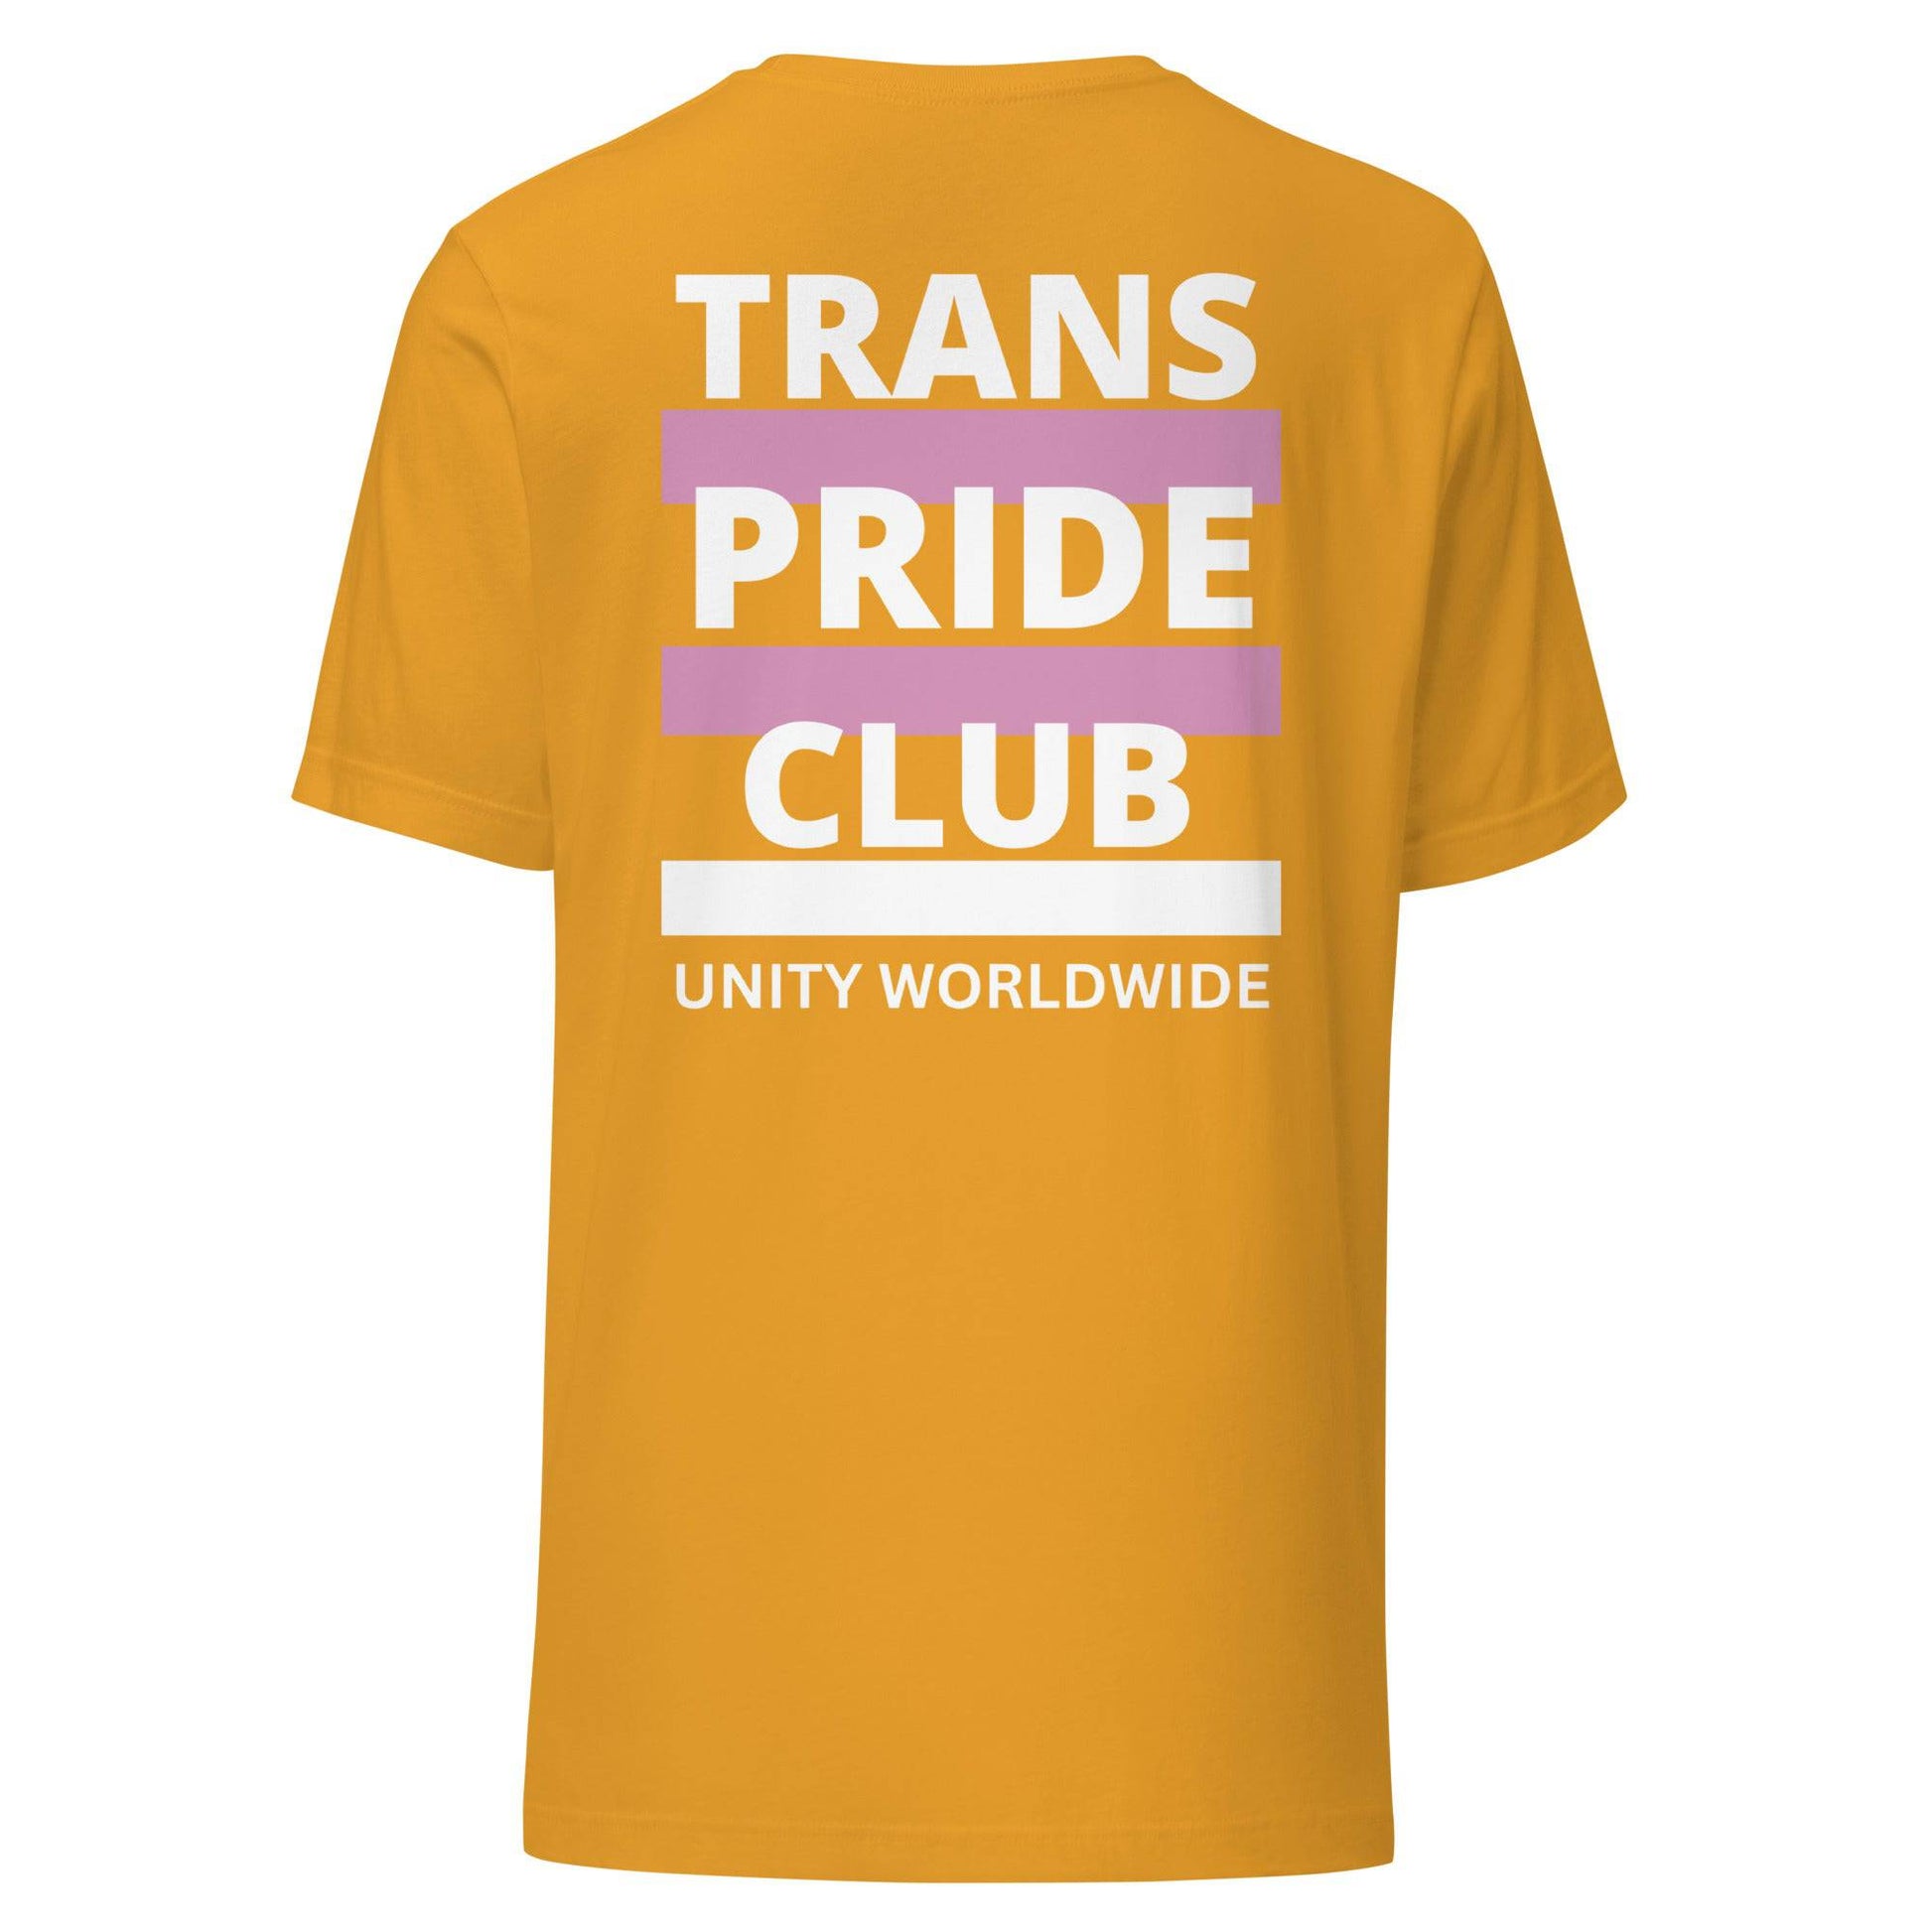 Trans Pride Club Unisex t-shirt - Rose Gold Co. Shop